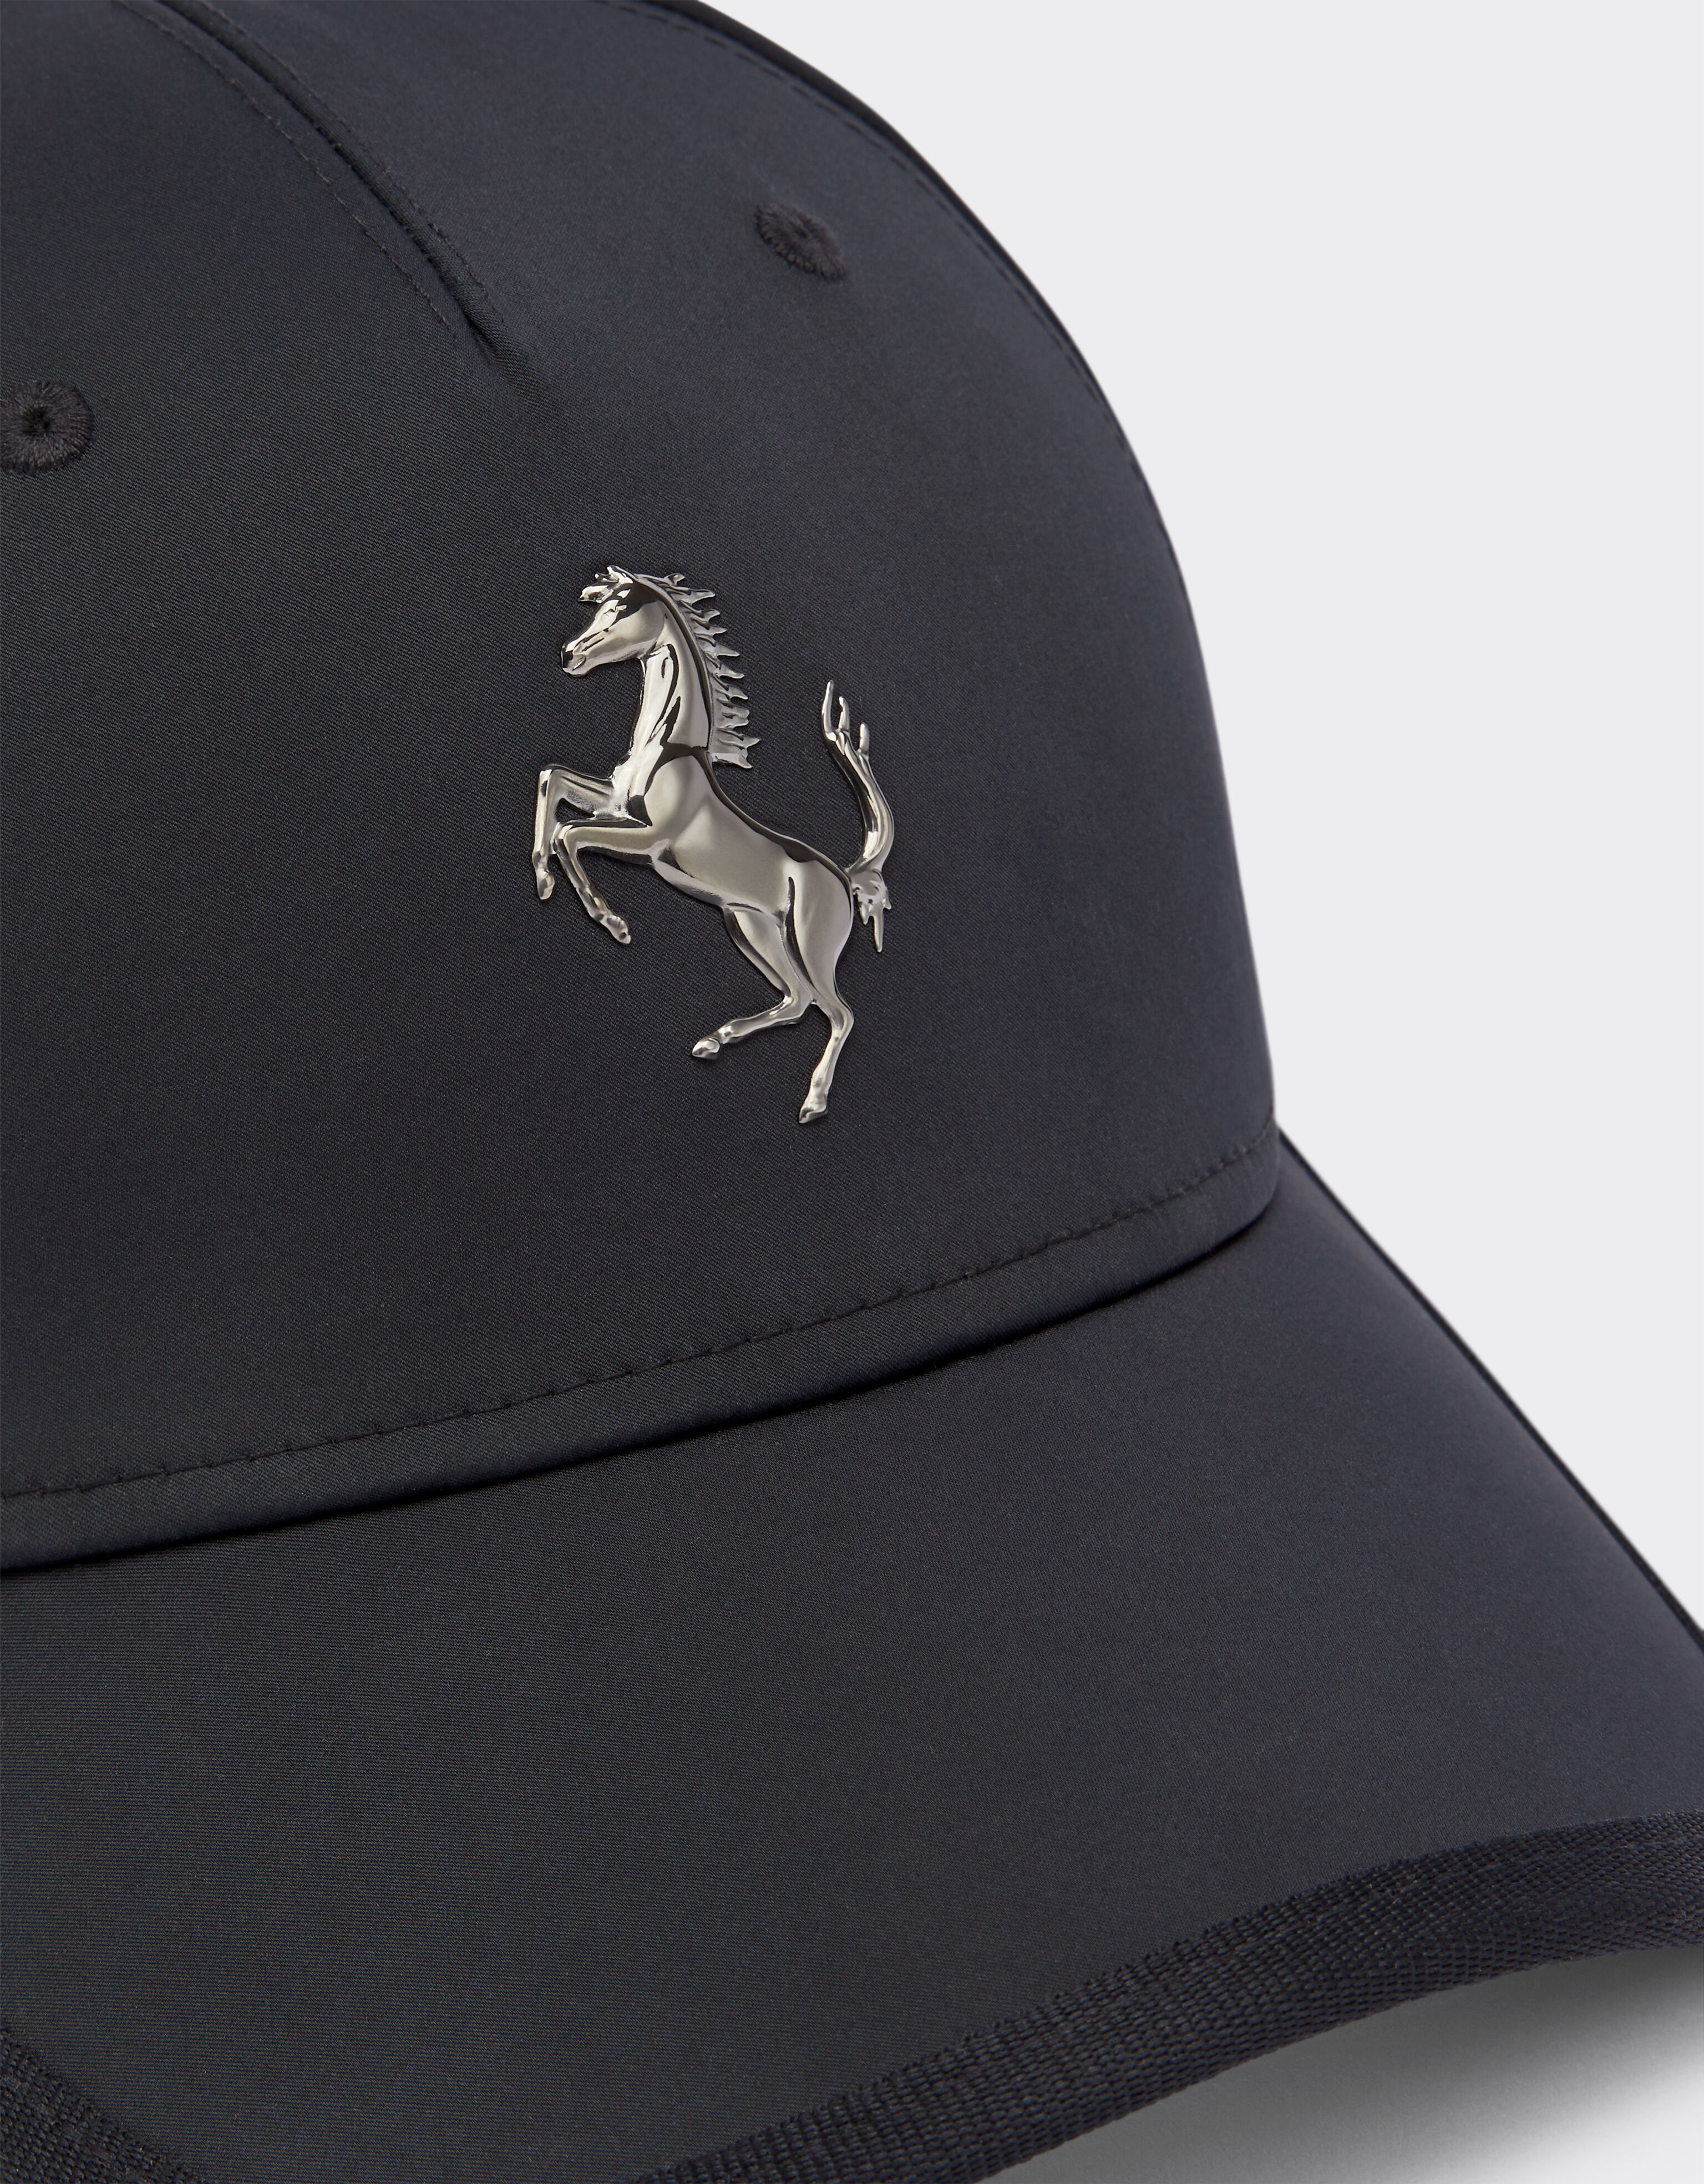 Ferrari Baseball cap with Prancing Horse detail Black 20070f